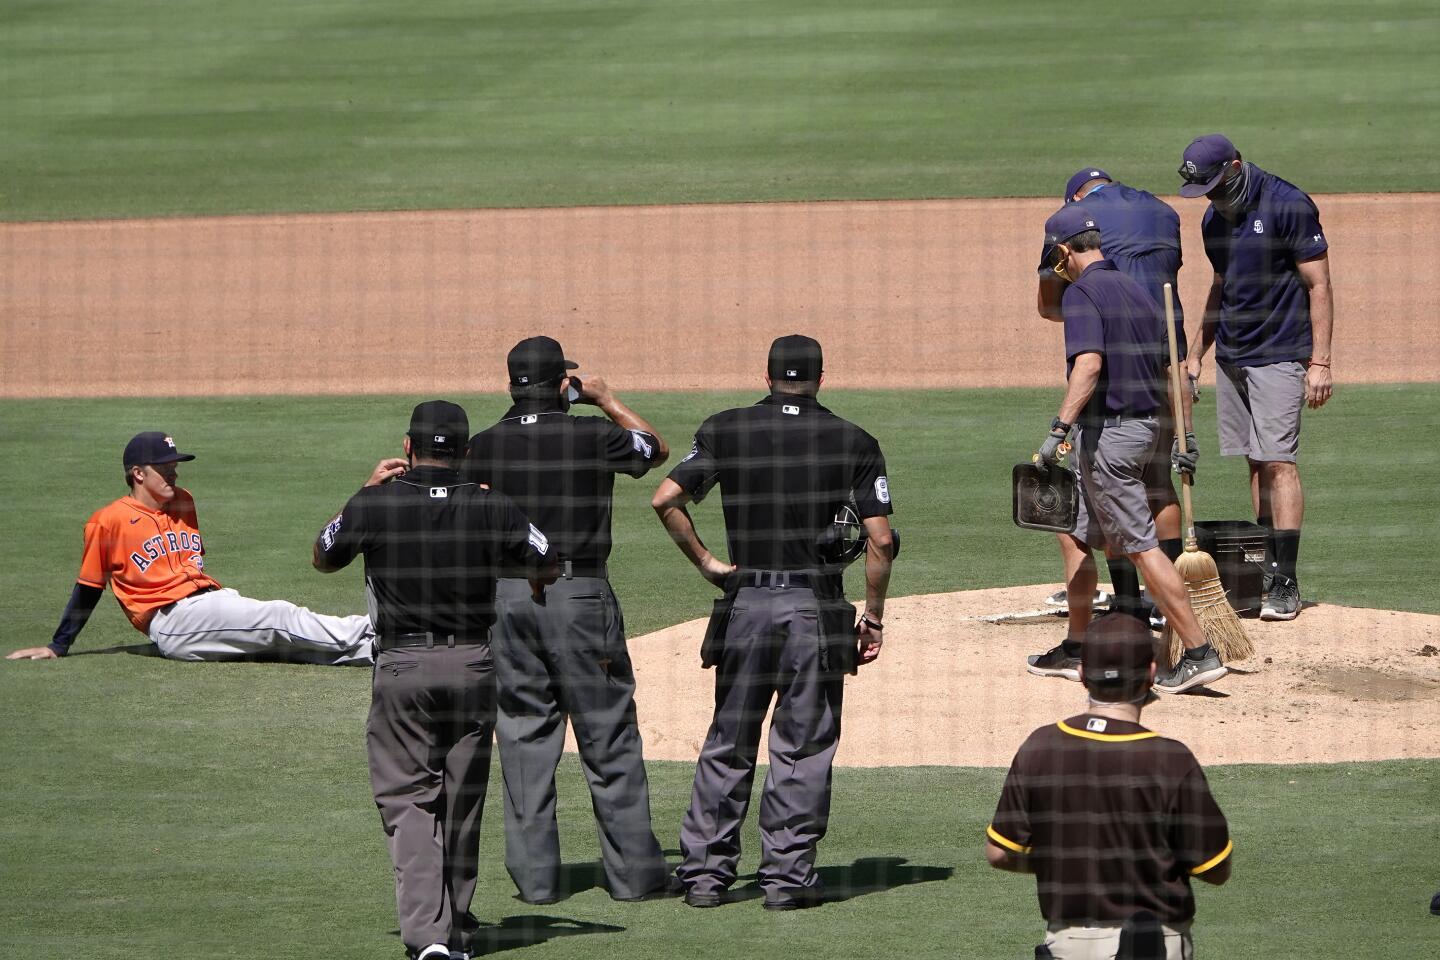 Padres notes: Zack Greinke on the mound; Astros get heckled